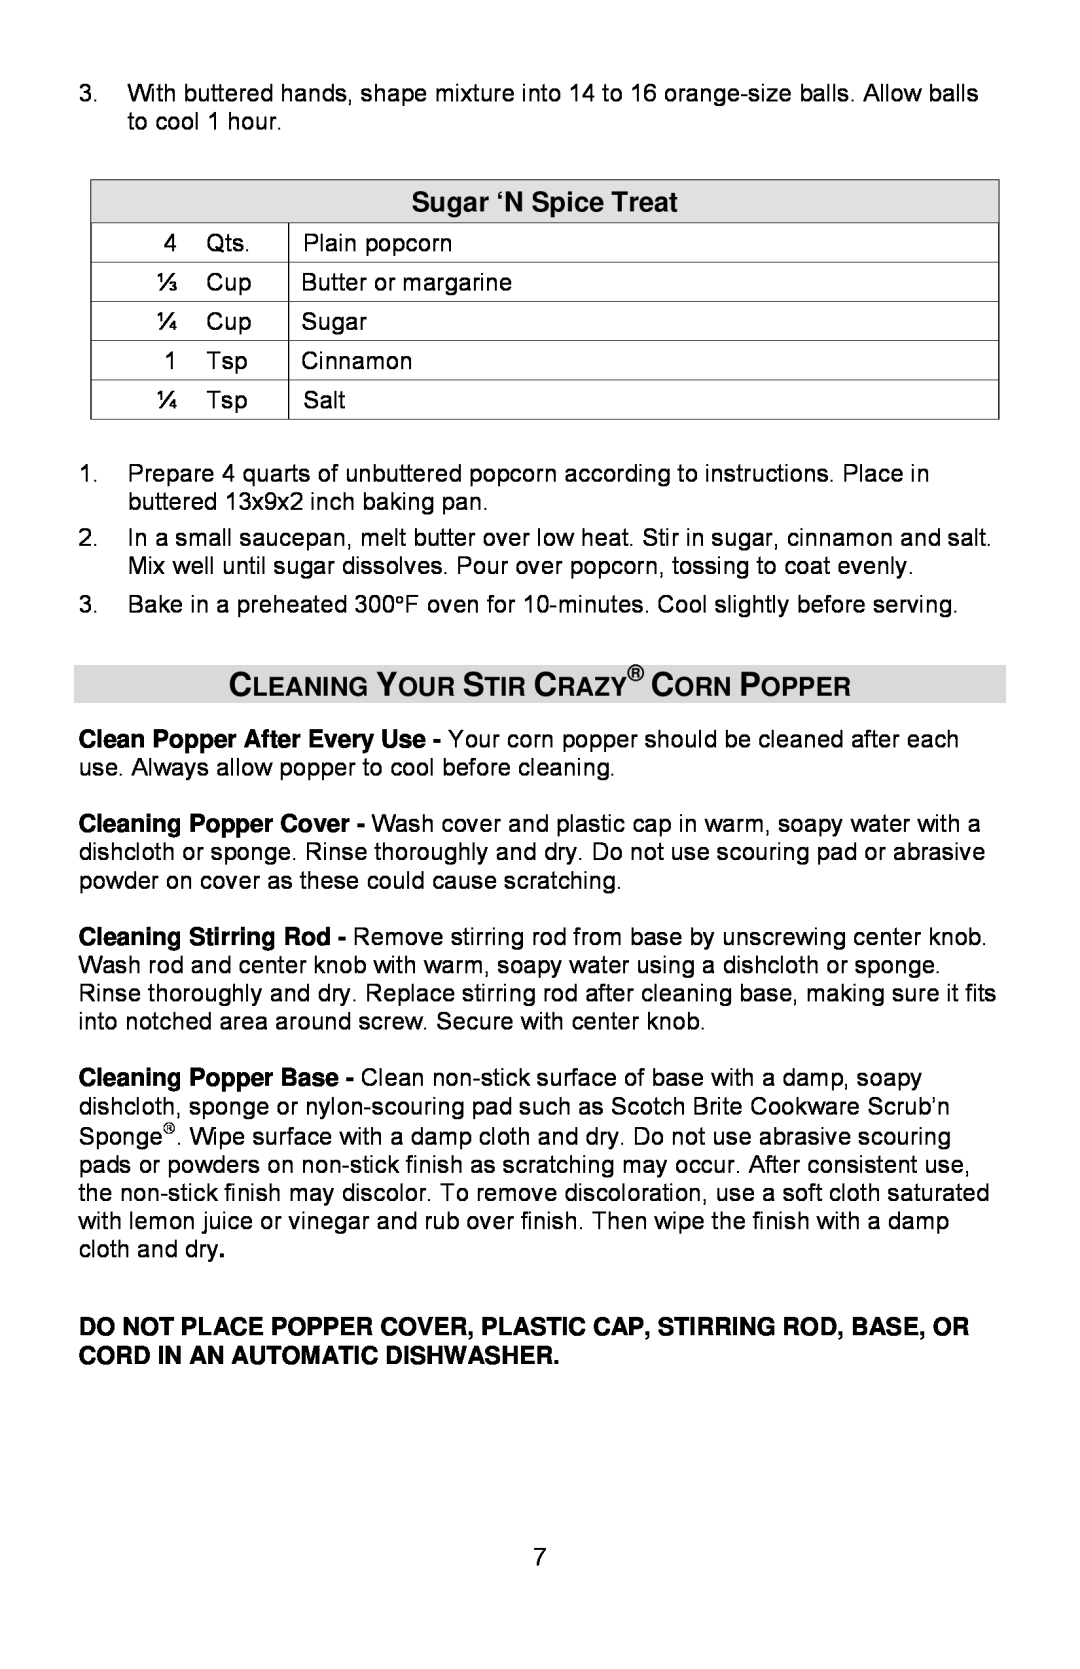 West Bend L5557B, 82306 instruction manual Sugar ‘N Spice Treat, Cleaning Your Stir Crazy Corn Popper 